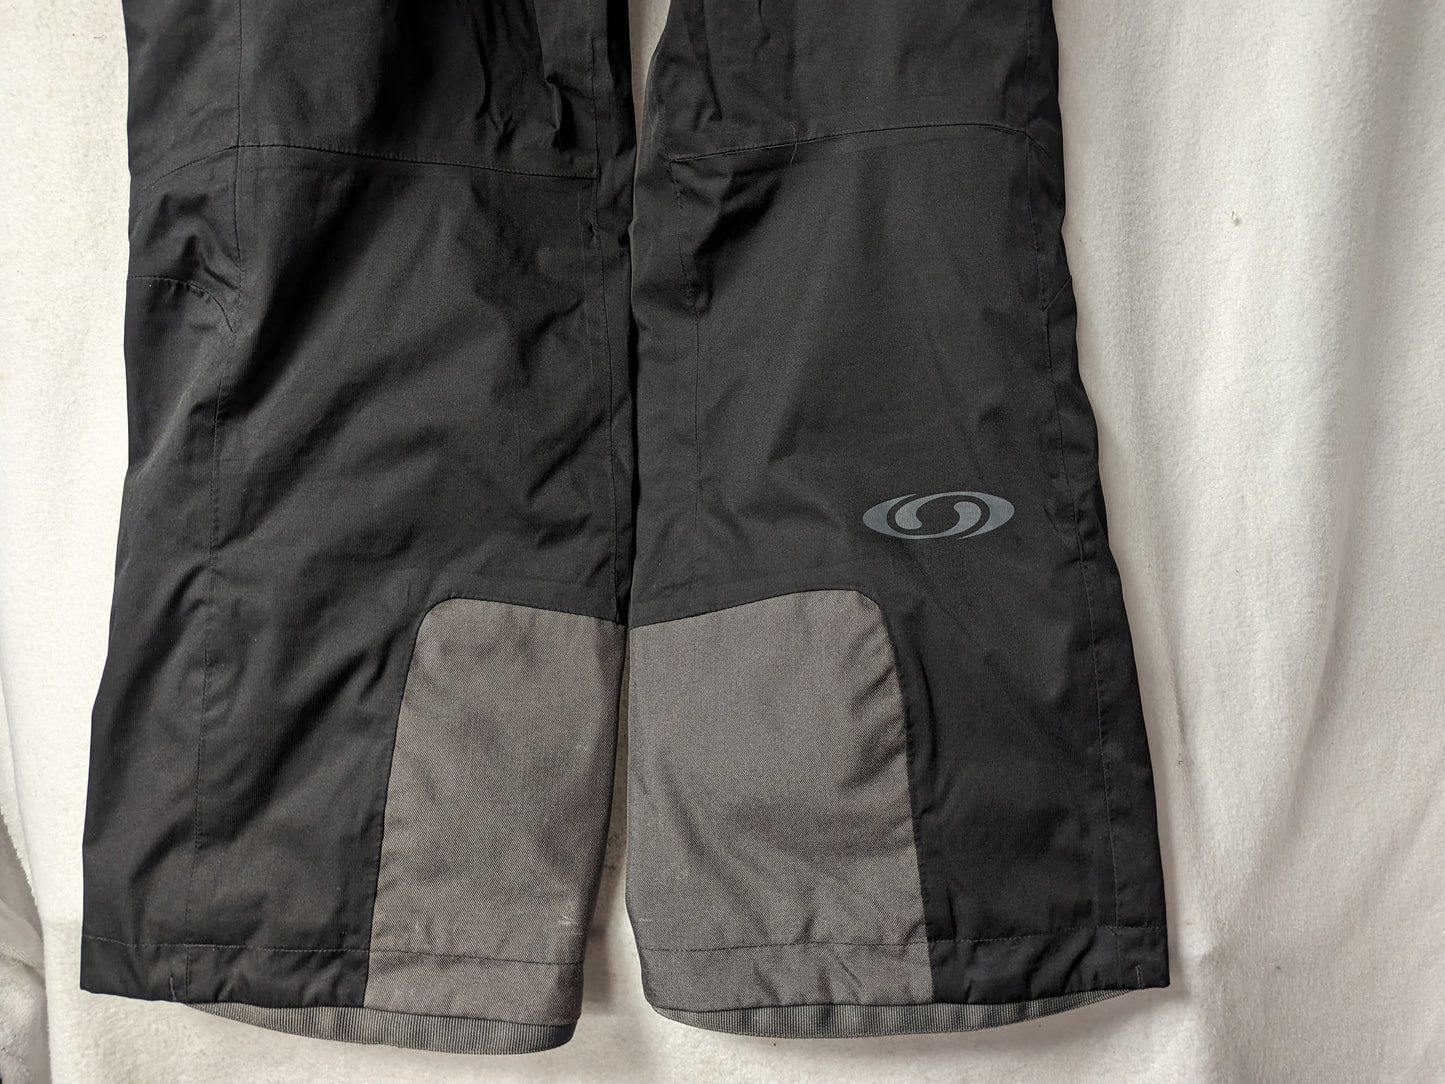 Salomon Lined Ski/Snowboard Pants Size Medium (10) Color Black Condition Used